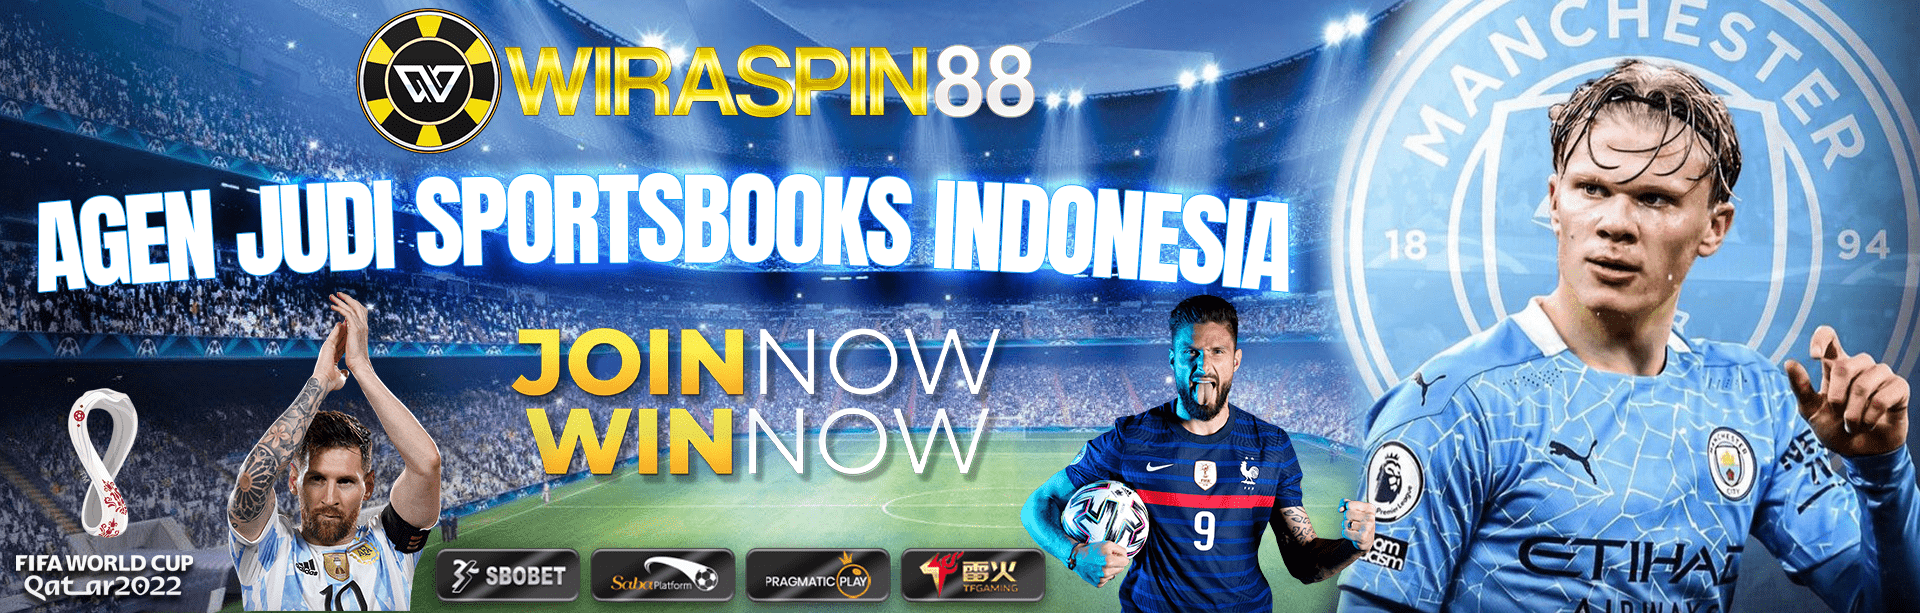 WiraSpin88 Agen Judi Sportsbook Indonesia